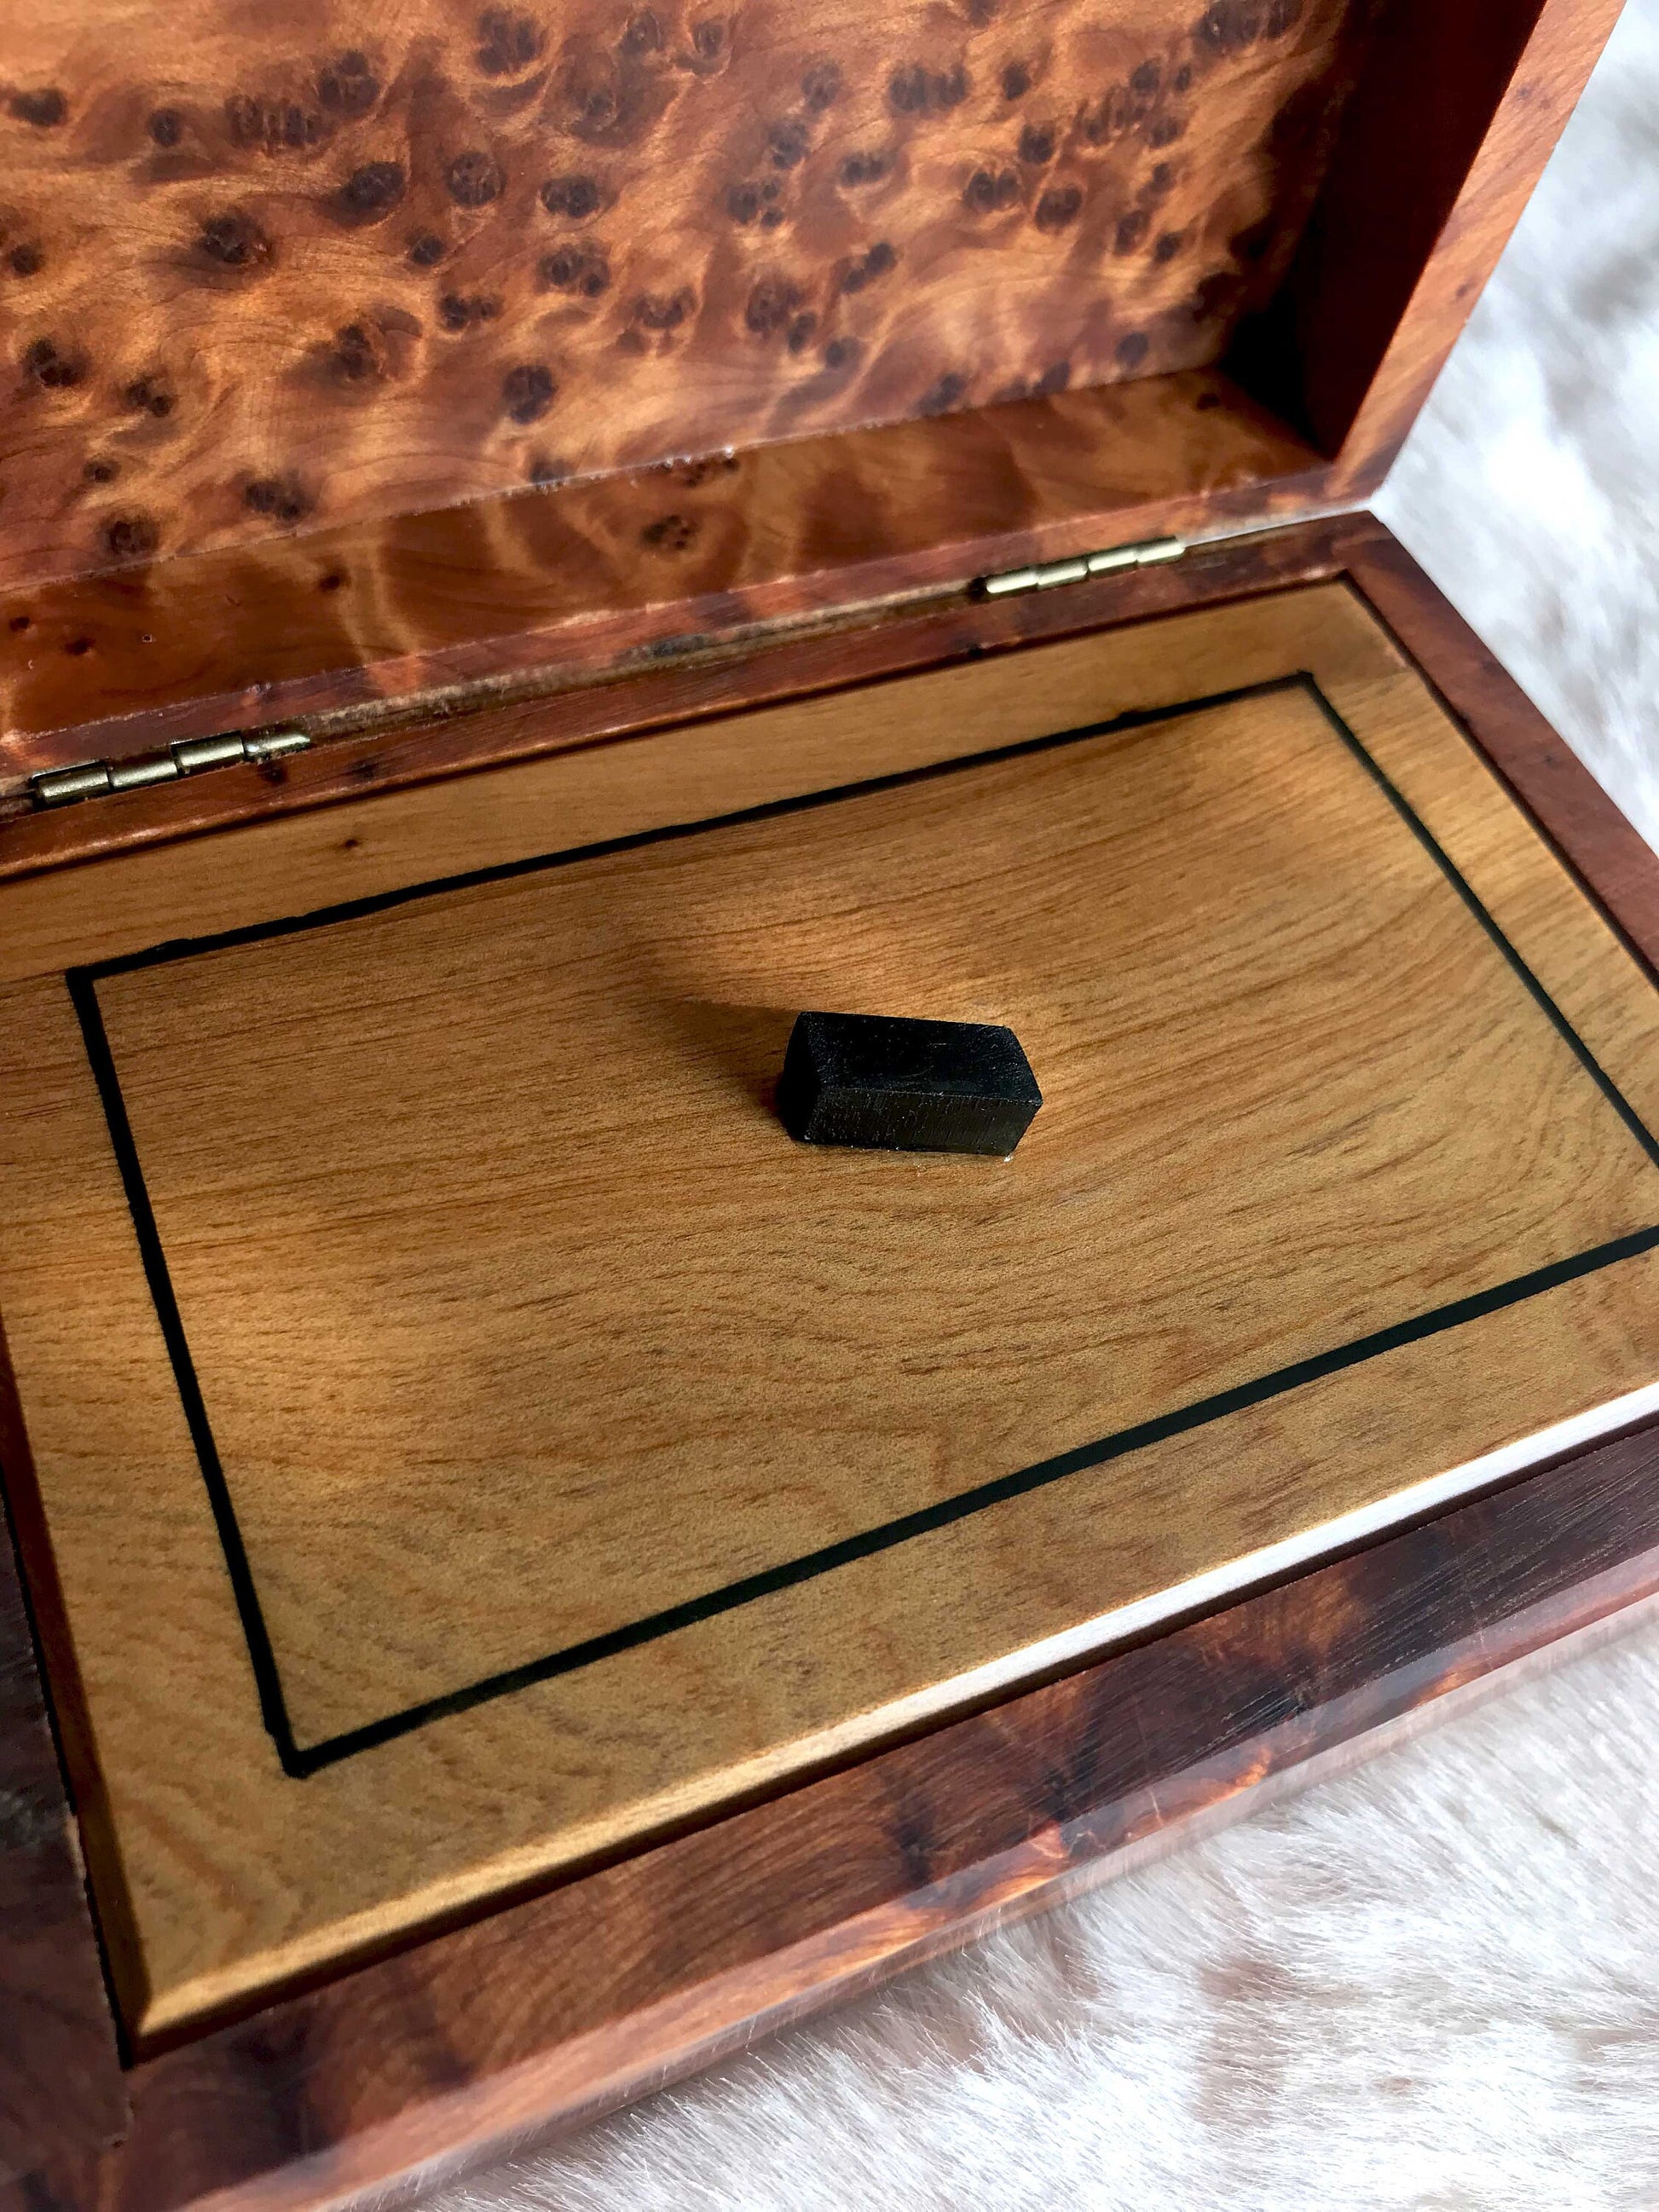 6"x4" Small Thuya wood jewellery Box,gift idea,wooden box organizer,engraved Custom Jewelry Box,decorative wooden box holder,Keepsake Box